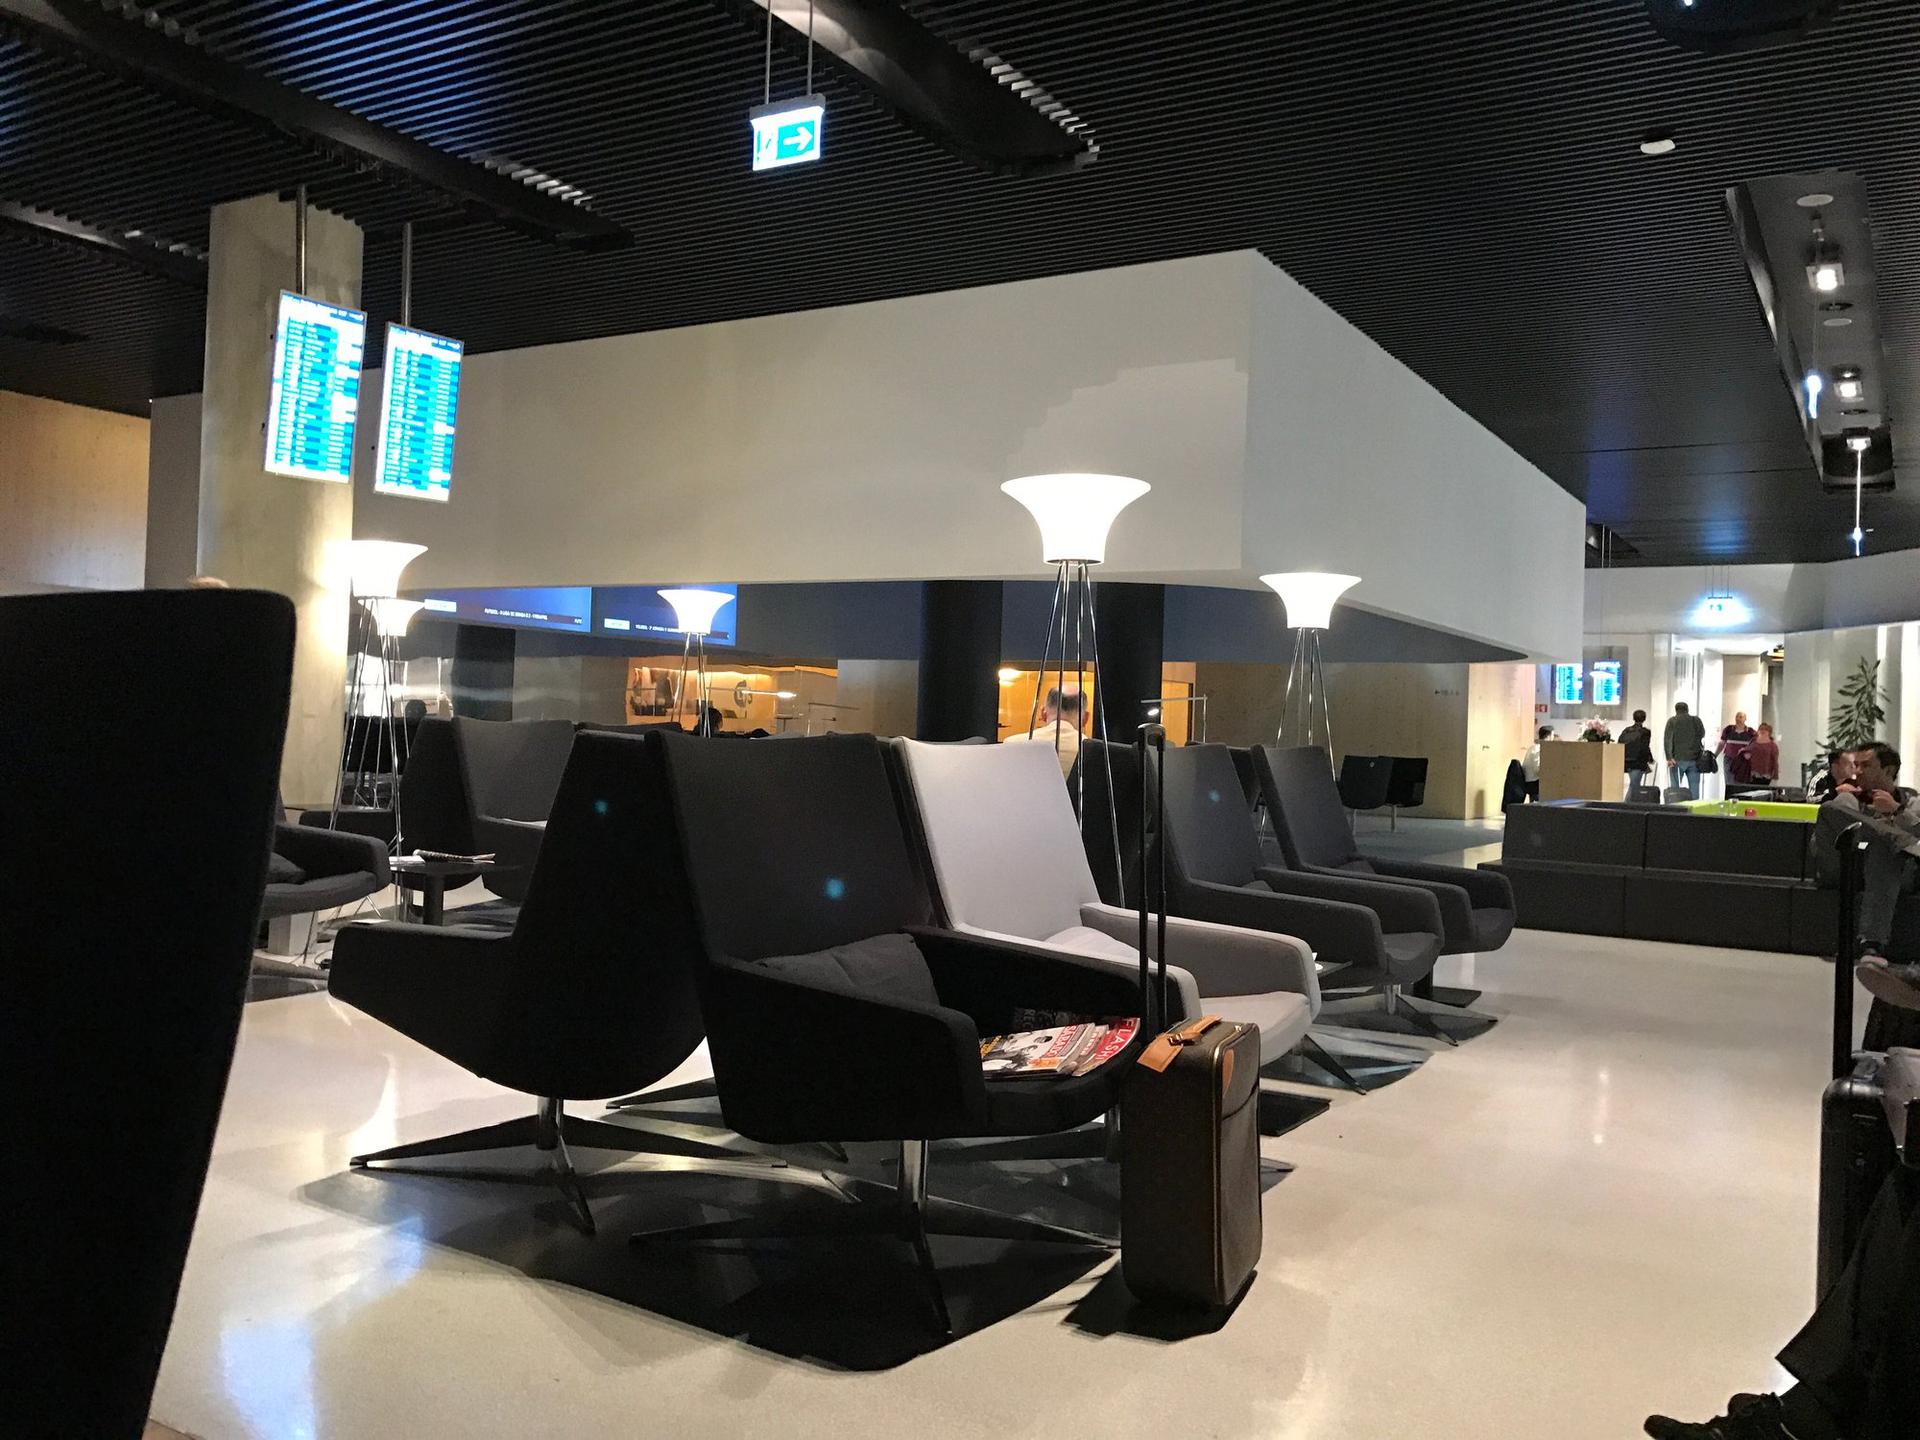 ANA Airport Lounge image 18 of 49